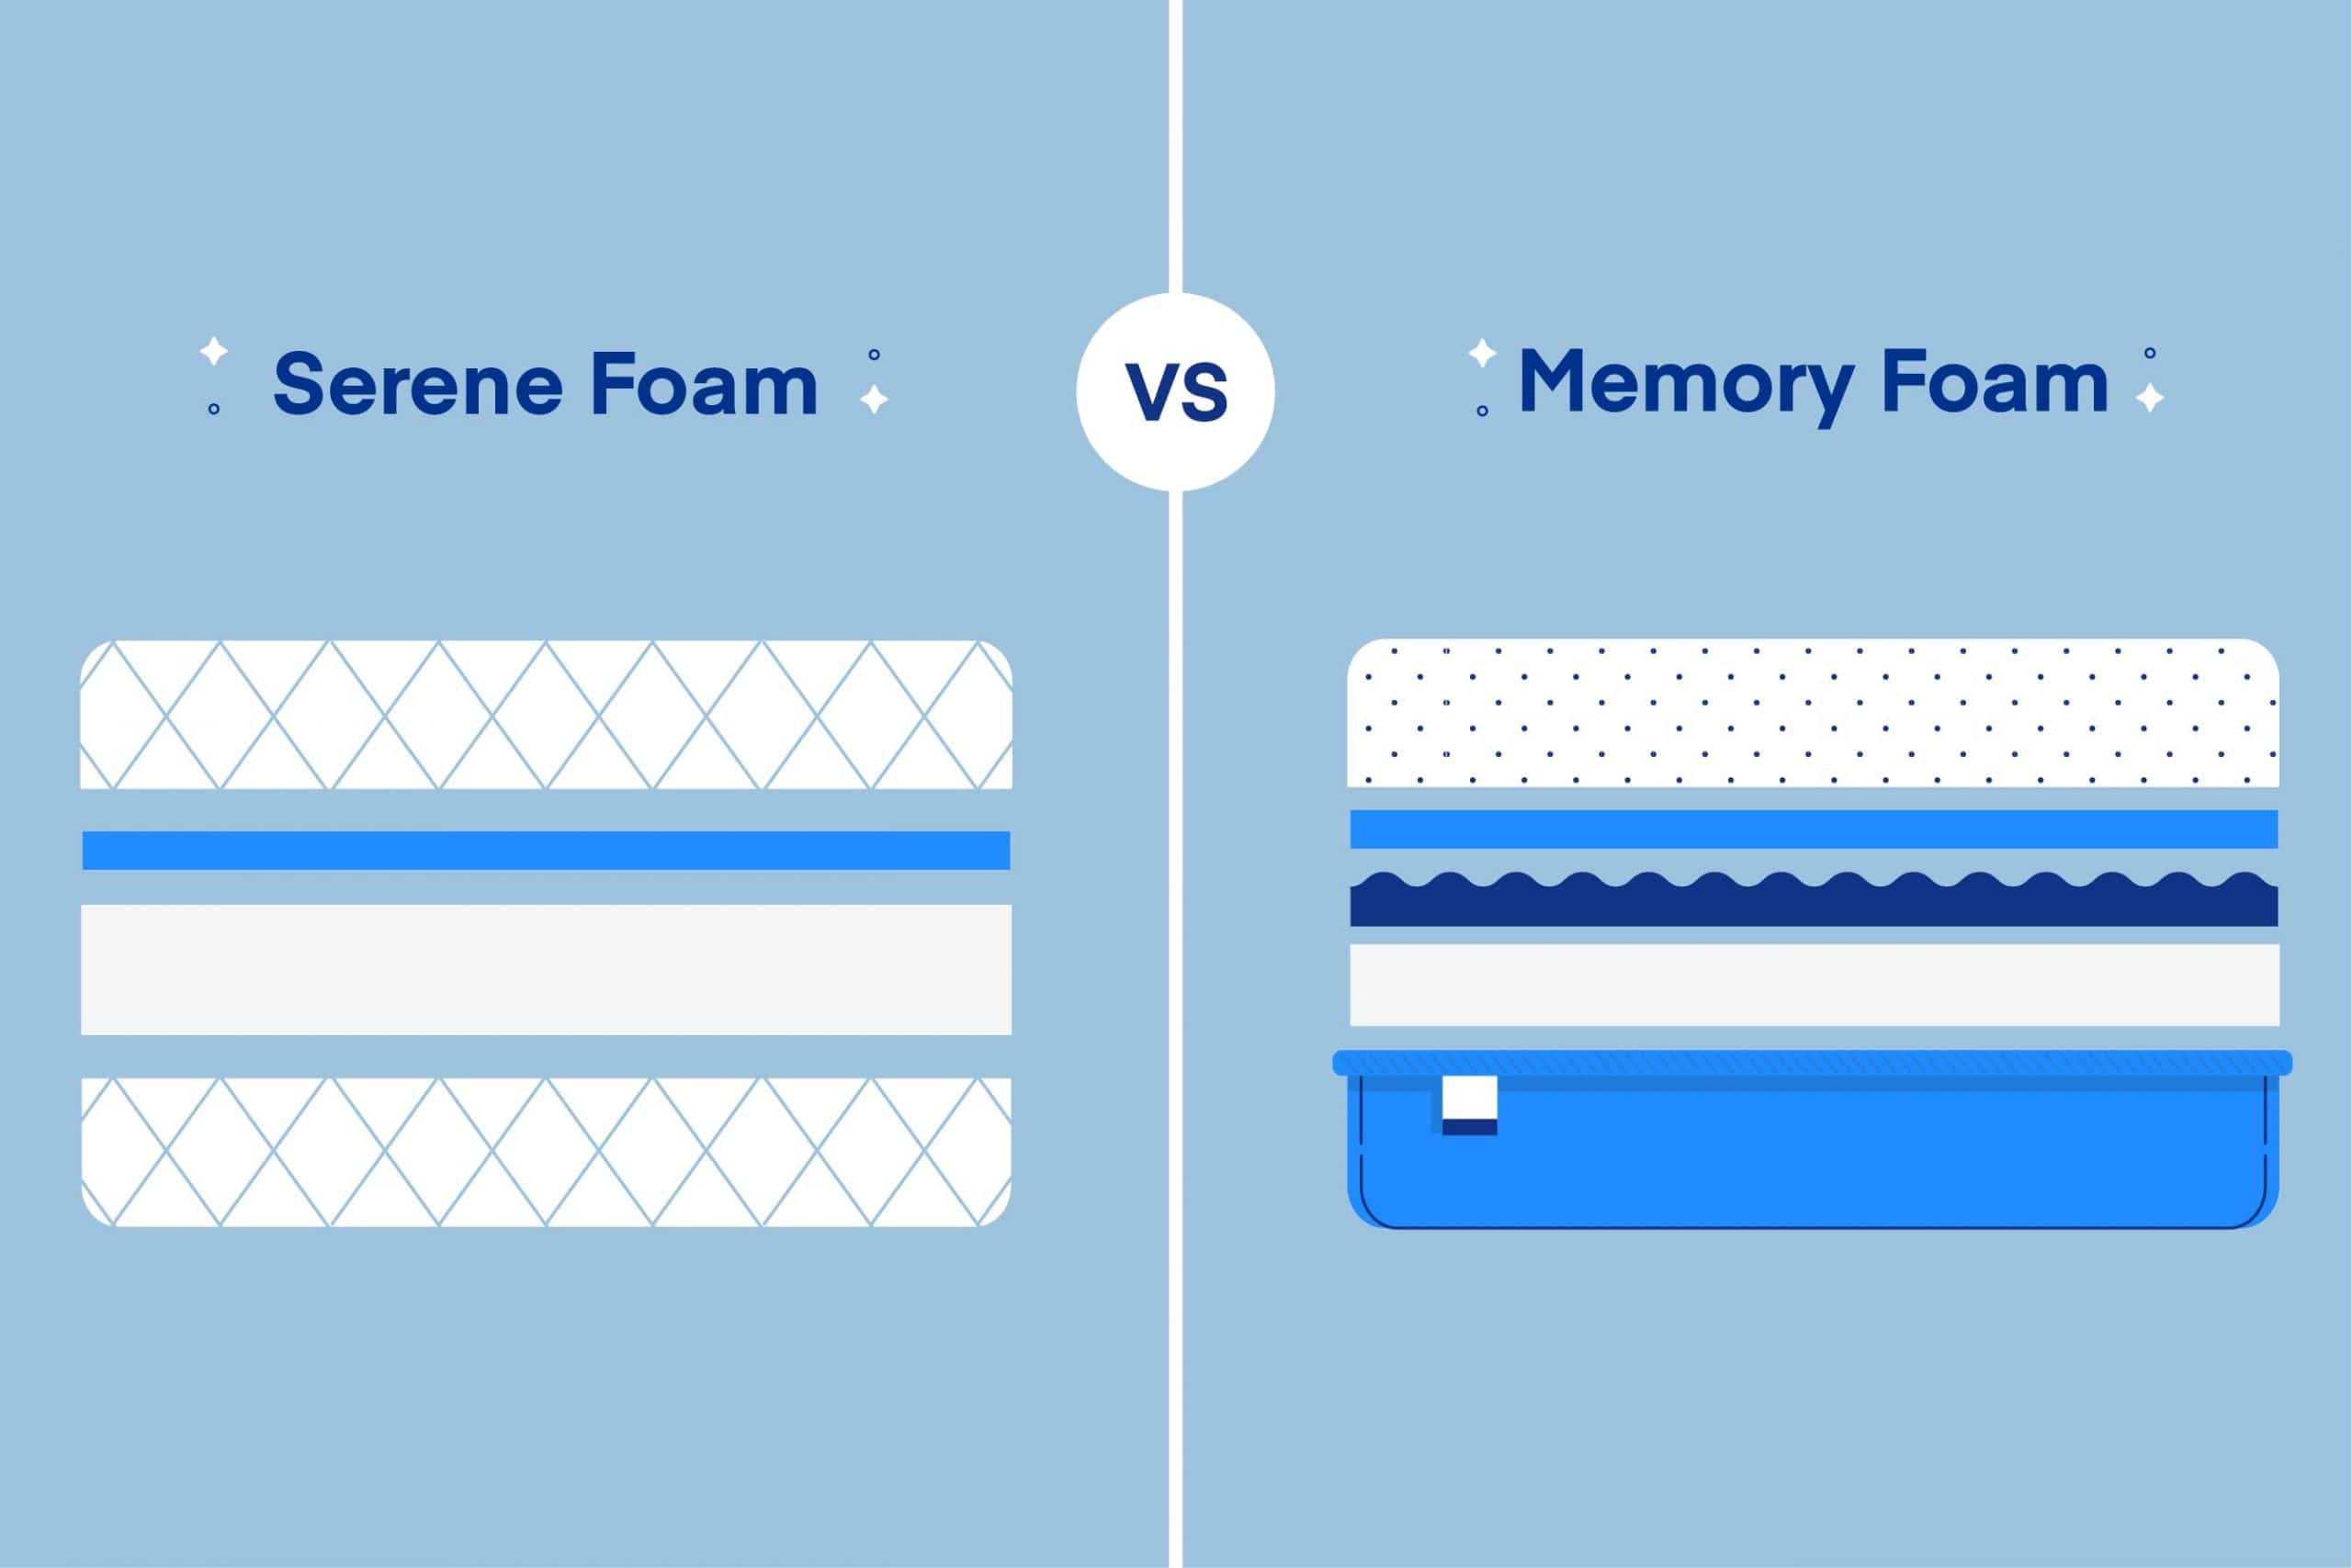 Memory Foam vs Serene Foam